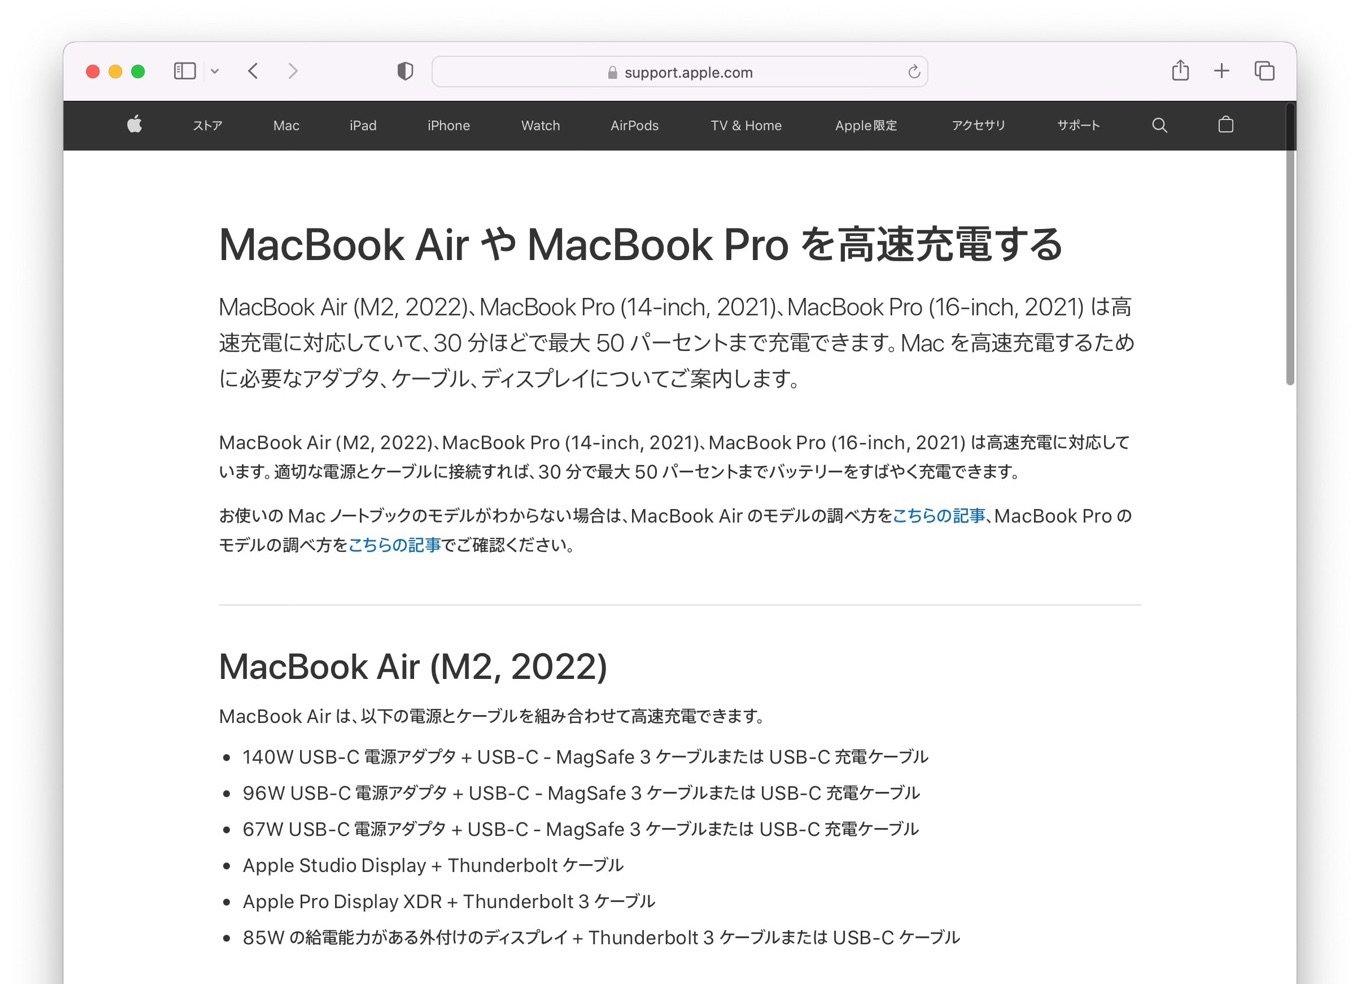 MacBook Air は、以下の電源とケーブルを組み合わせて高速充電できます。